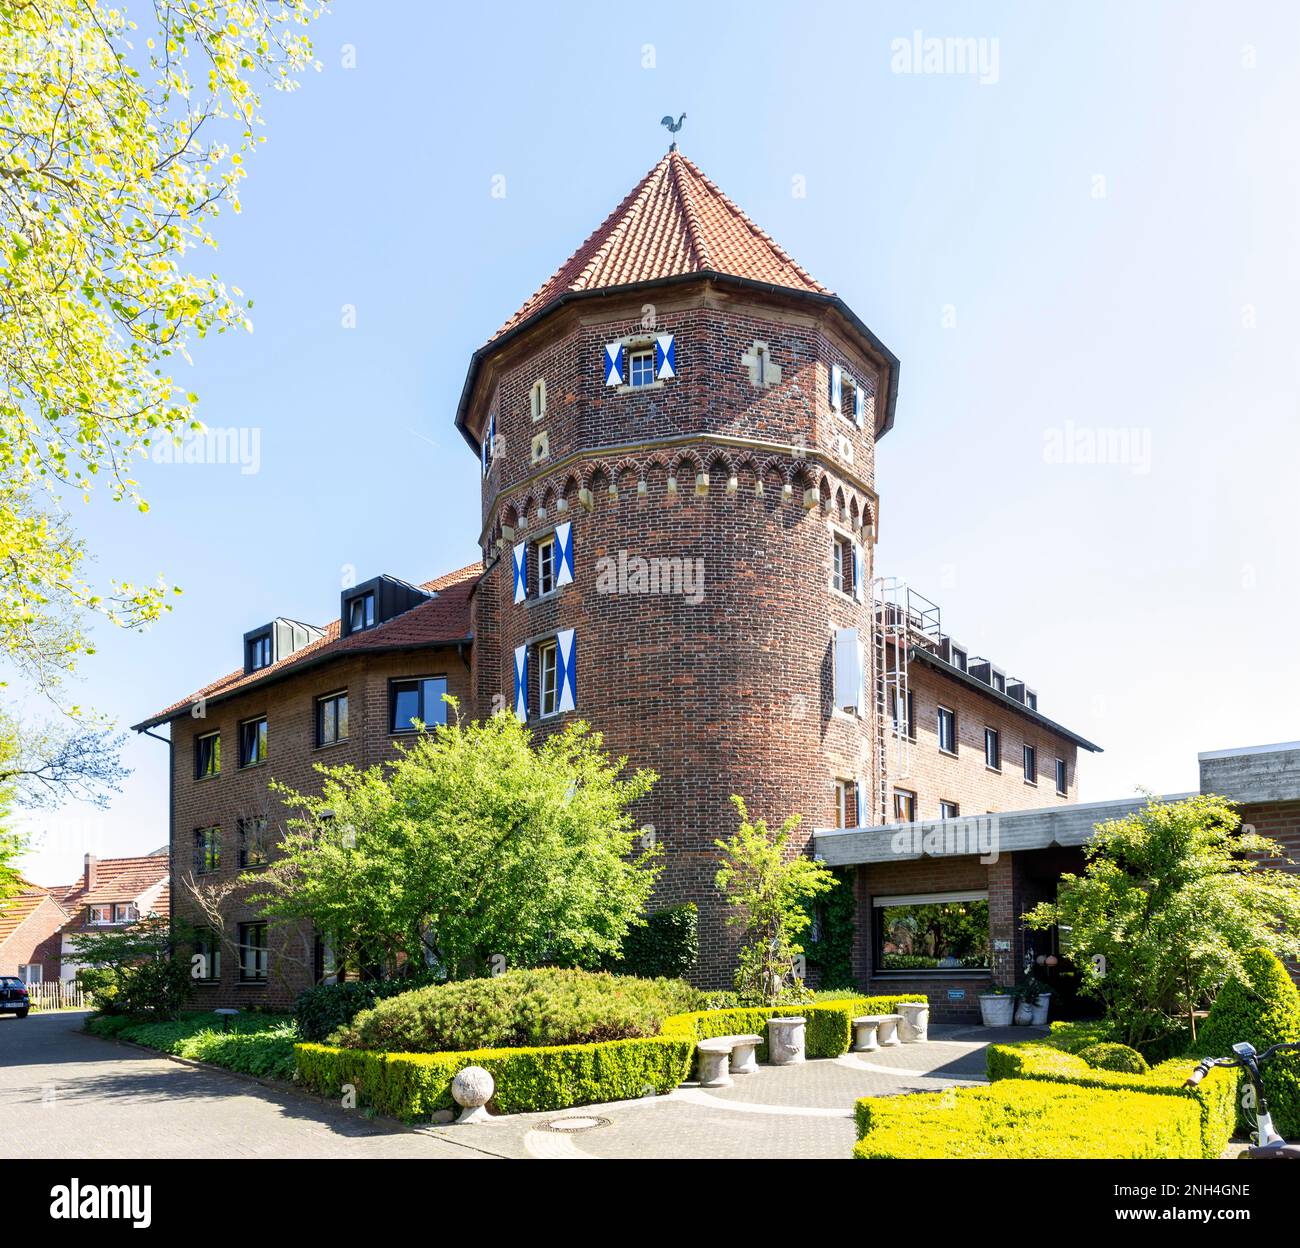 Burghotel, brick tower of the former Oeding moated castle, Oeding, Suedlohn, Muensterland, North Rhine-Westphalia, Germany Stock Photo